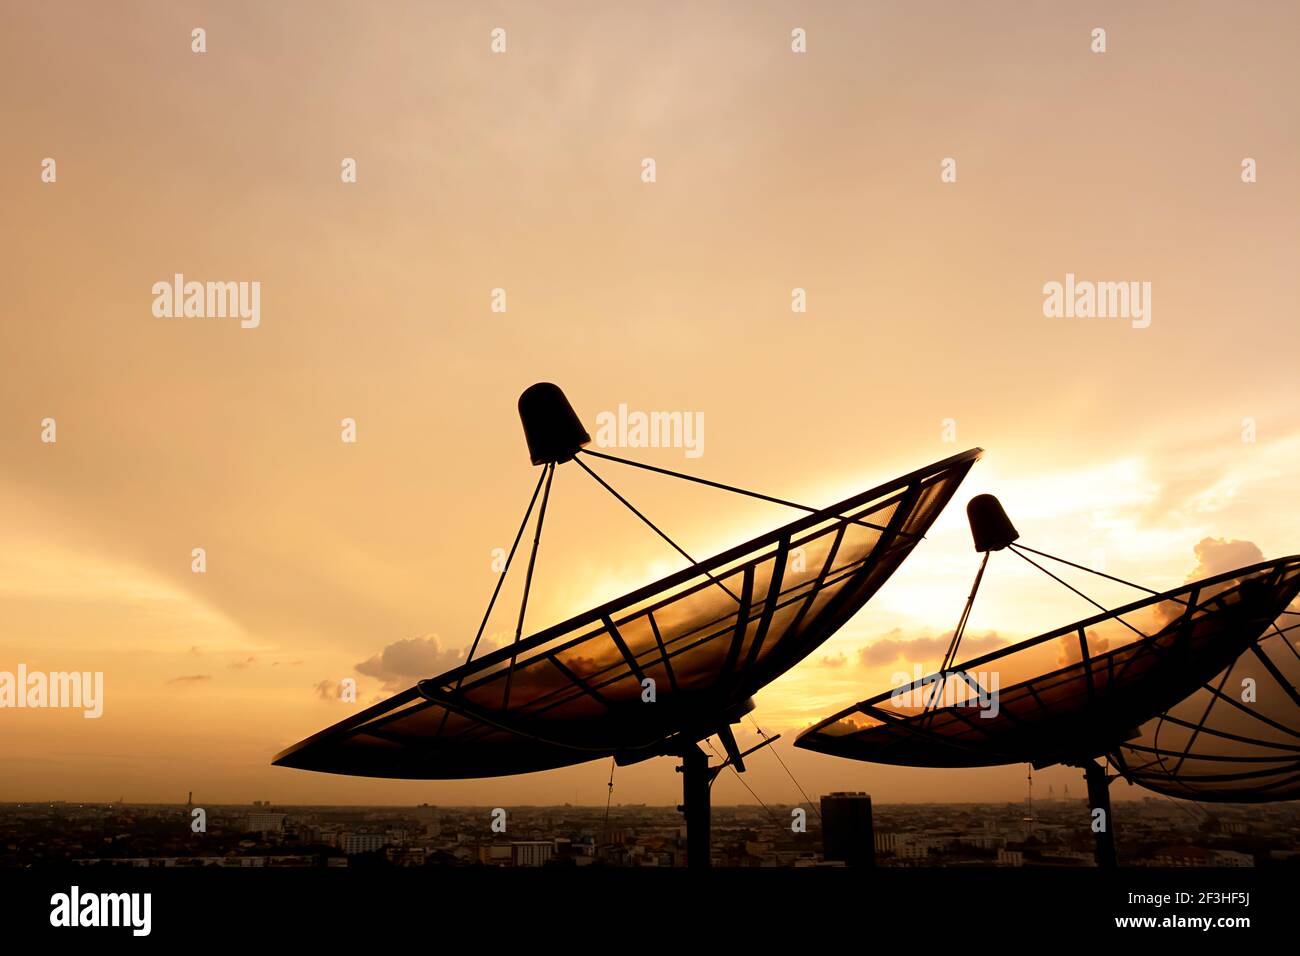 Satellite dish silhouette on twilight sky background Stock Photo